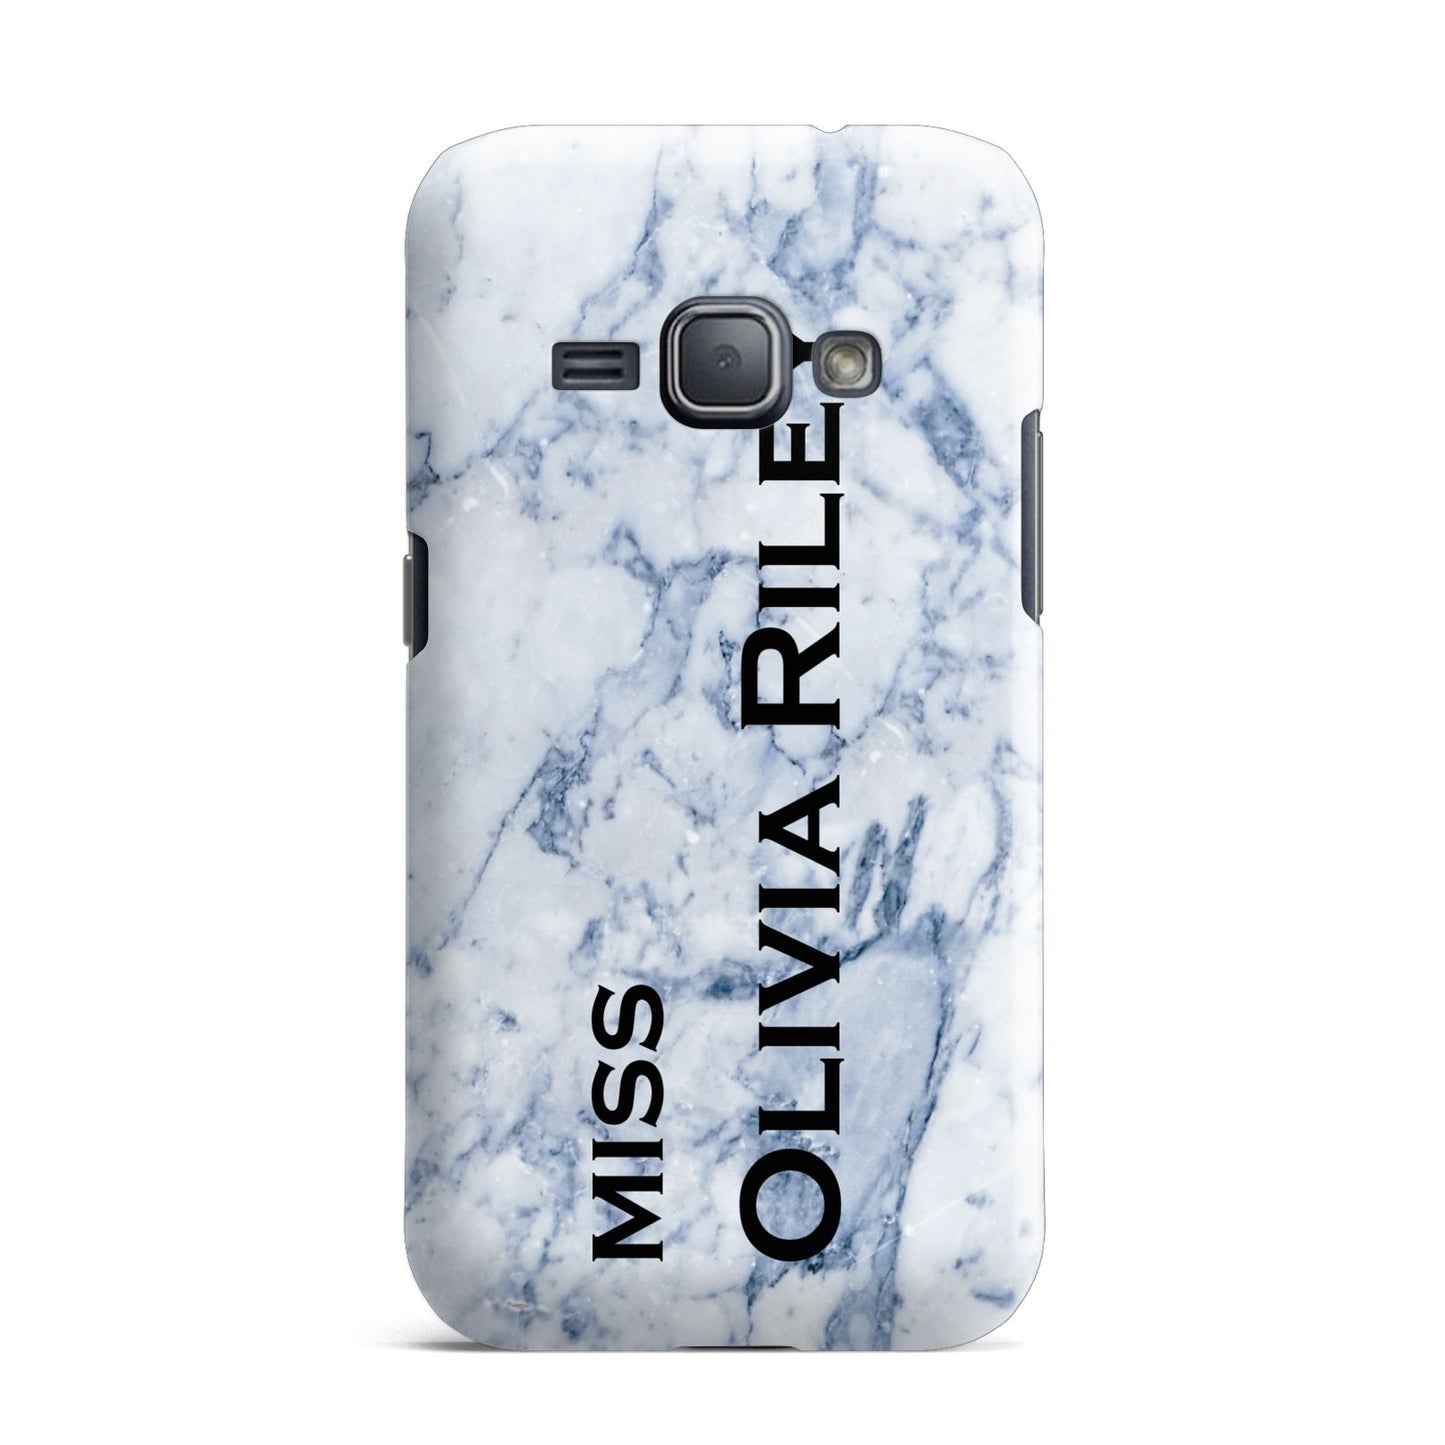 Full Name Grey Marble Samsung Galaxy J1 2016 Case